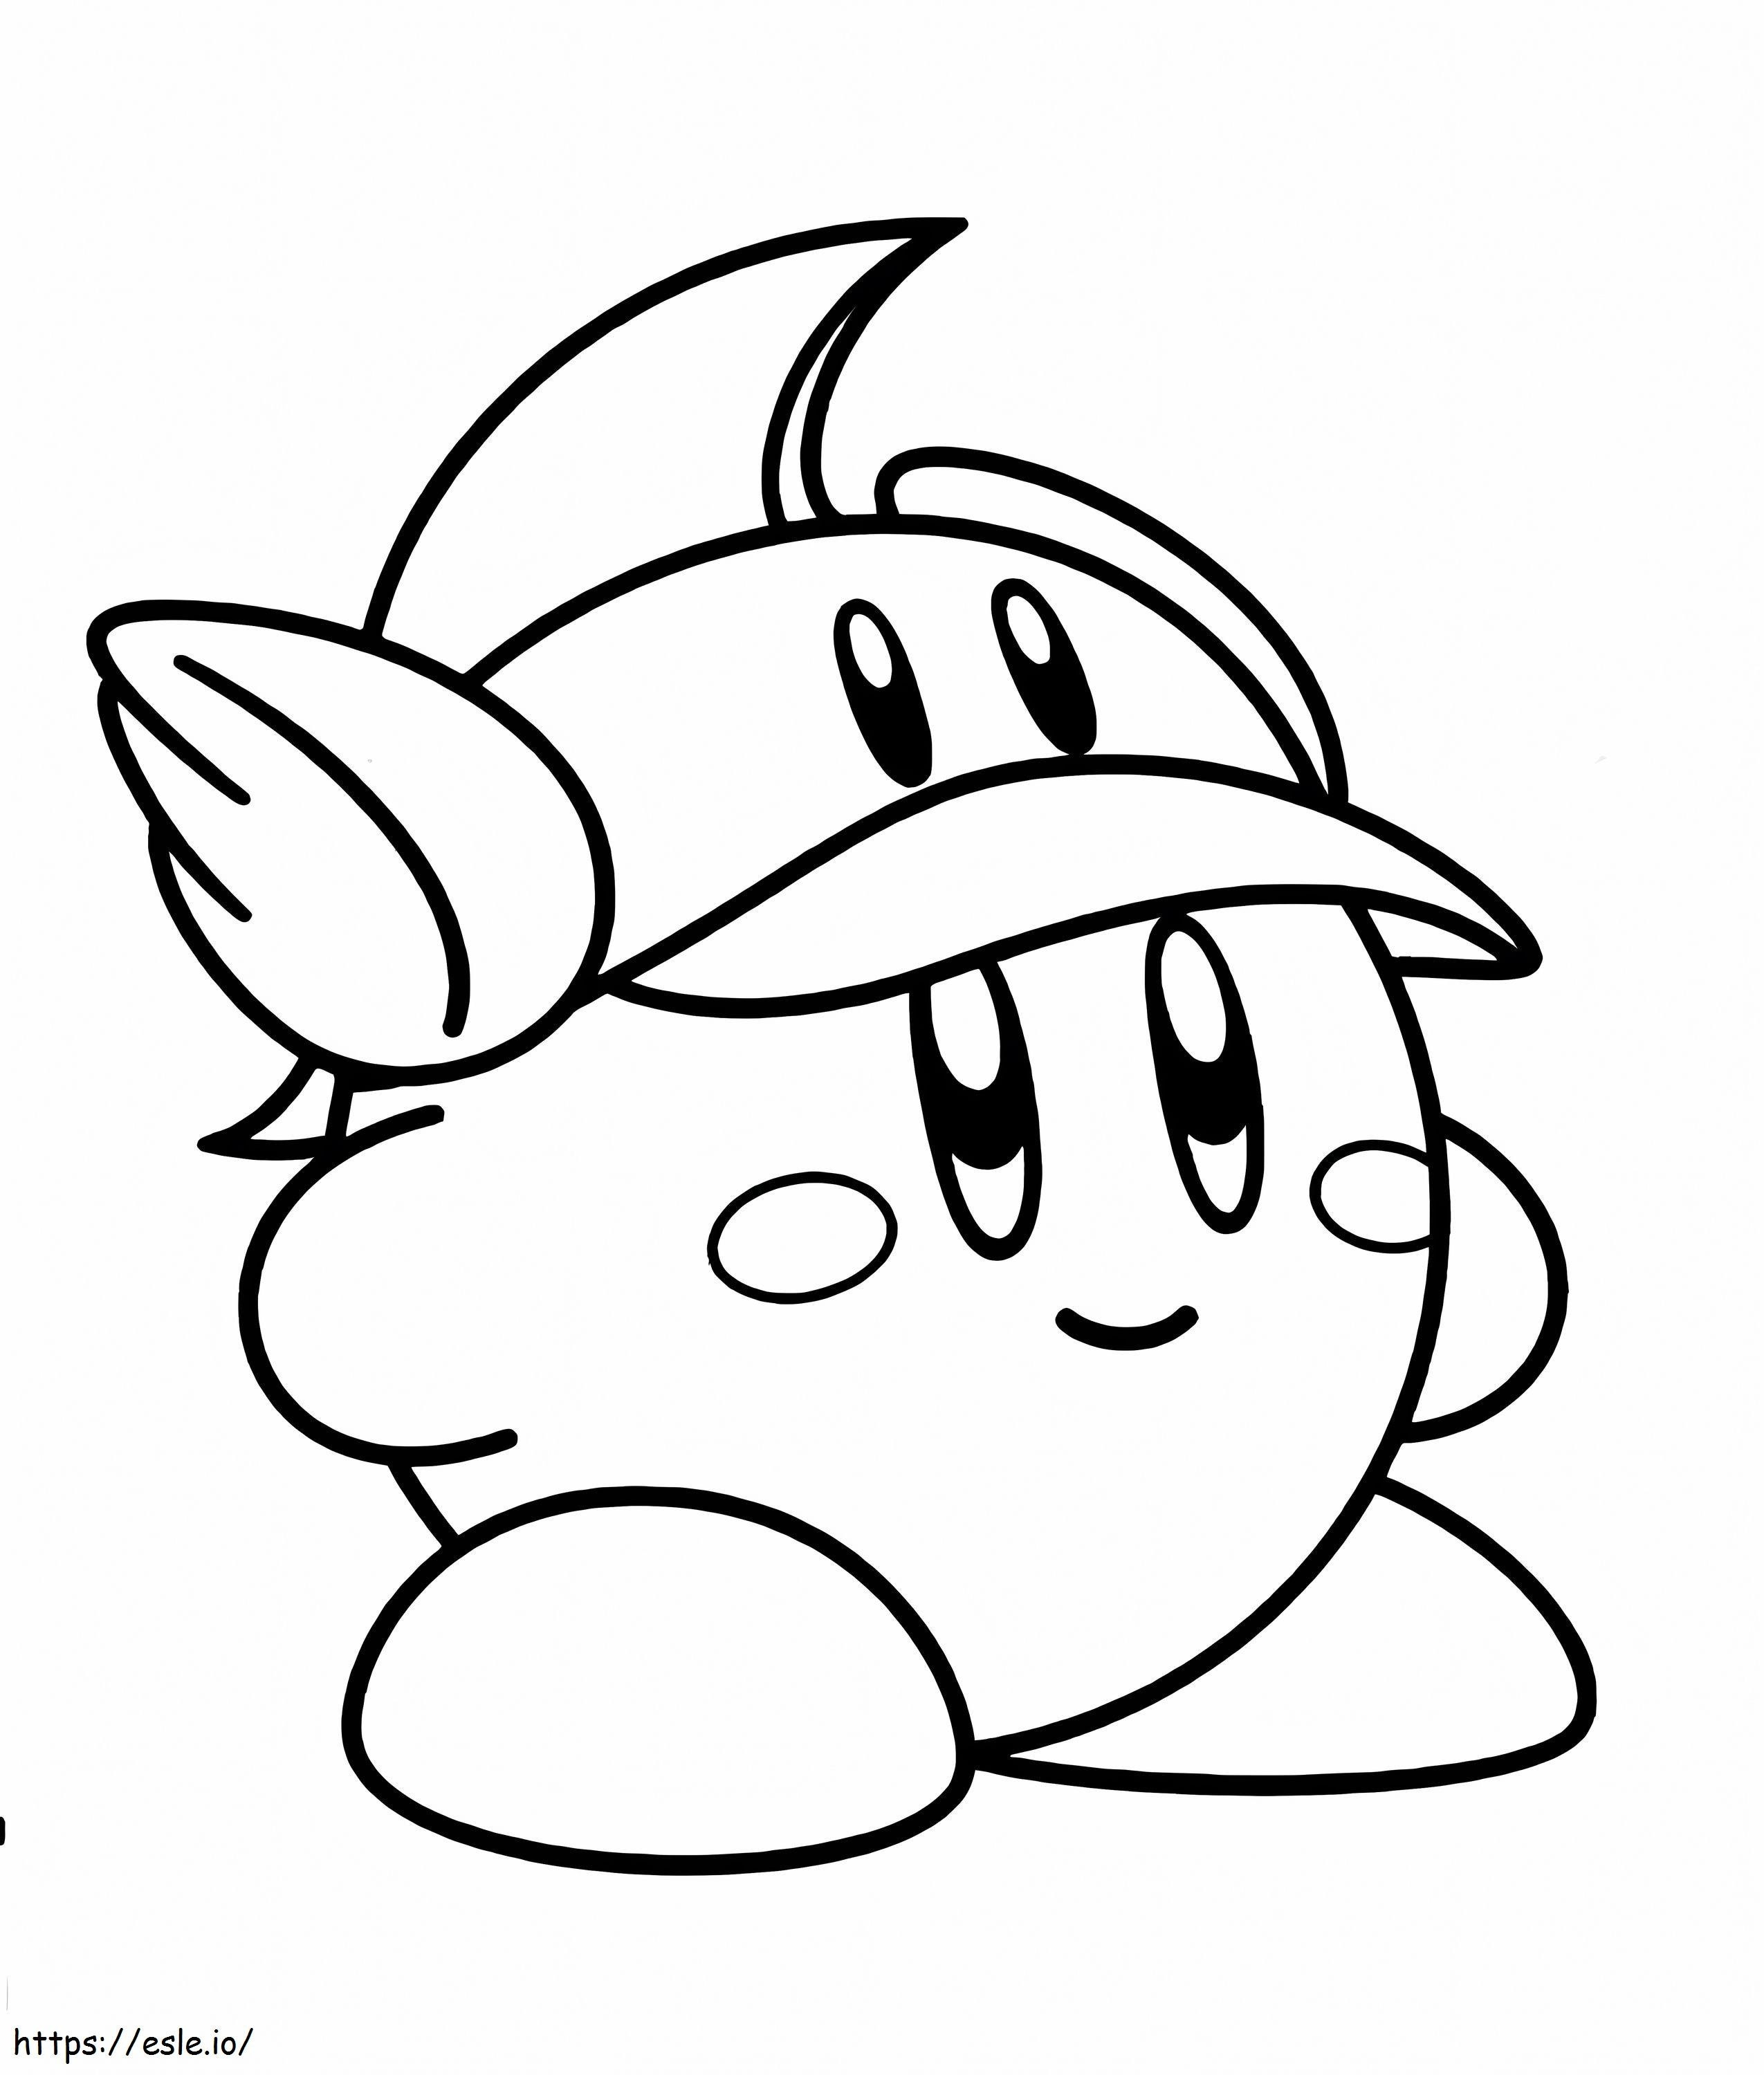 Guter Kirby ausmalbilder